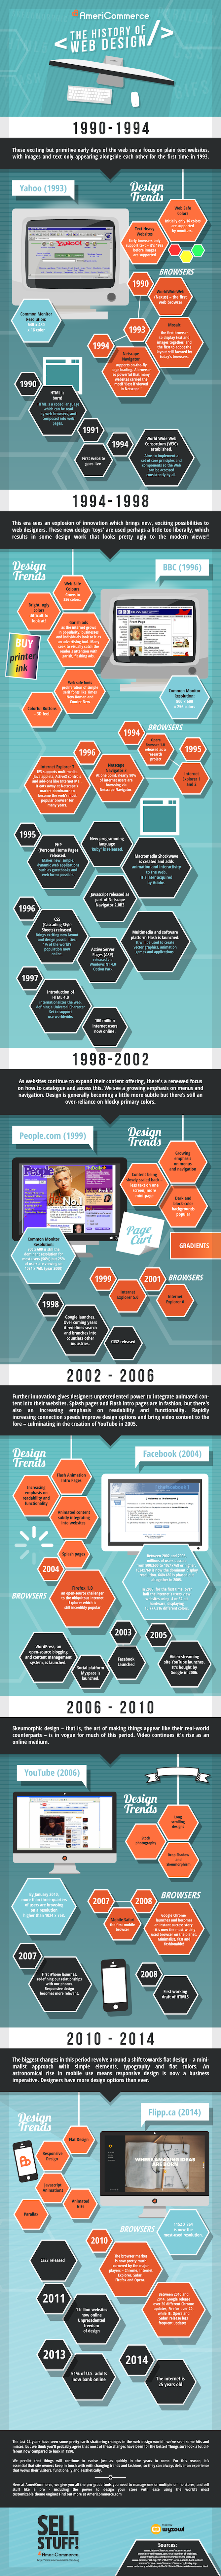 history-web-design-infographic